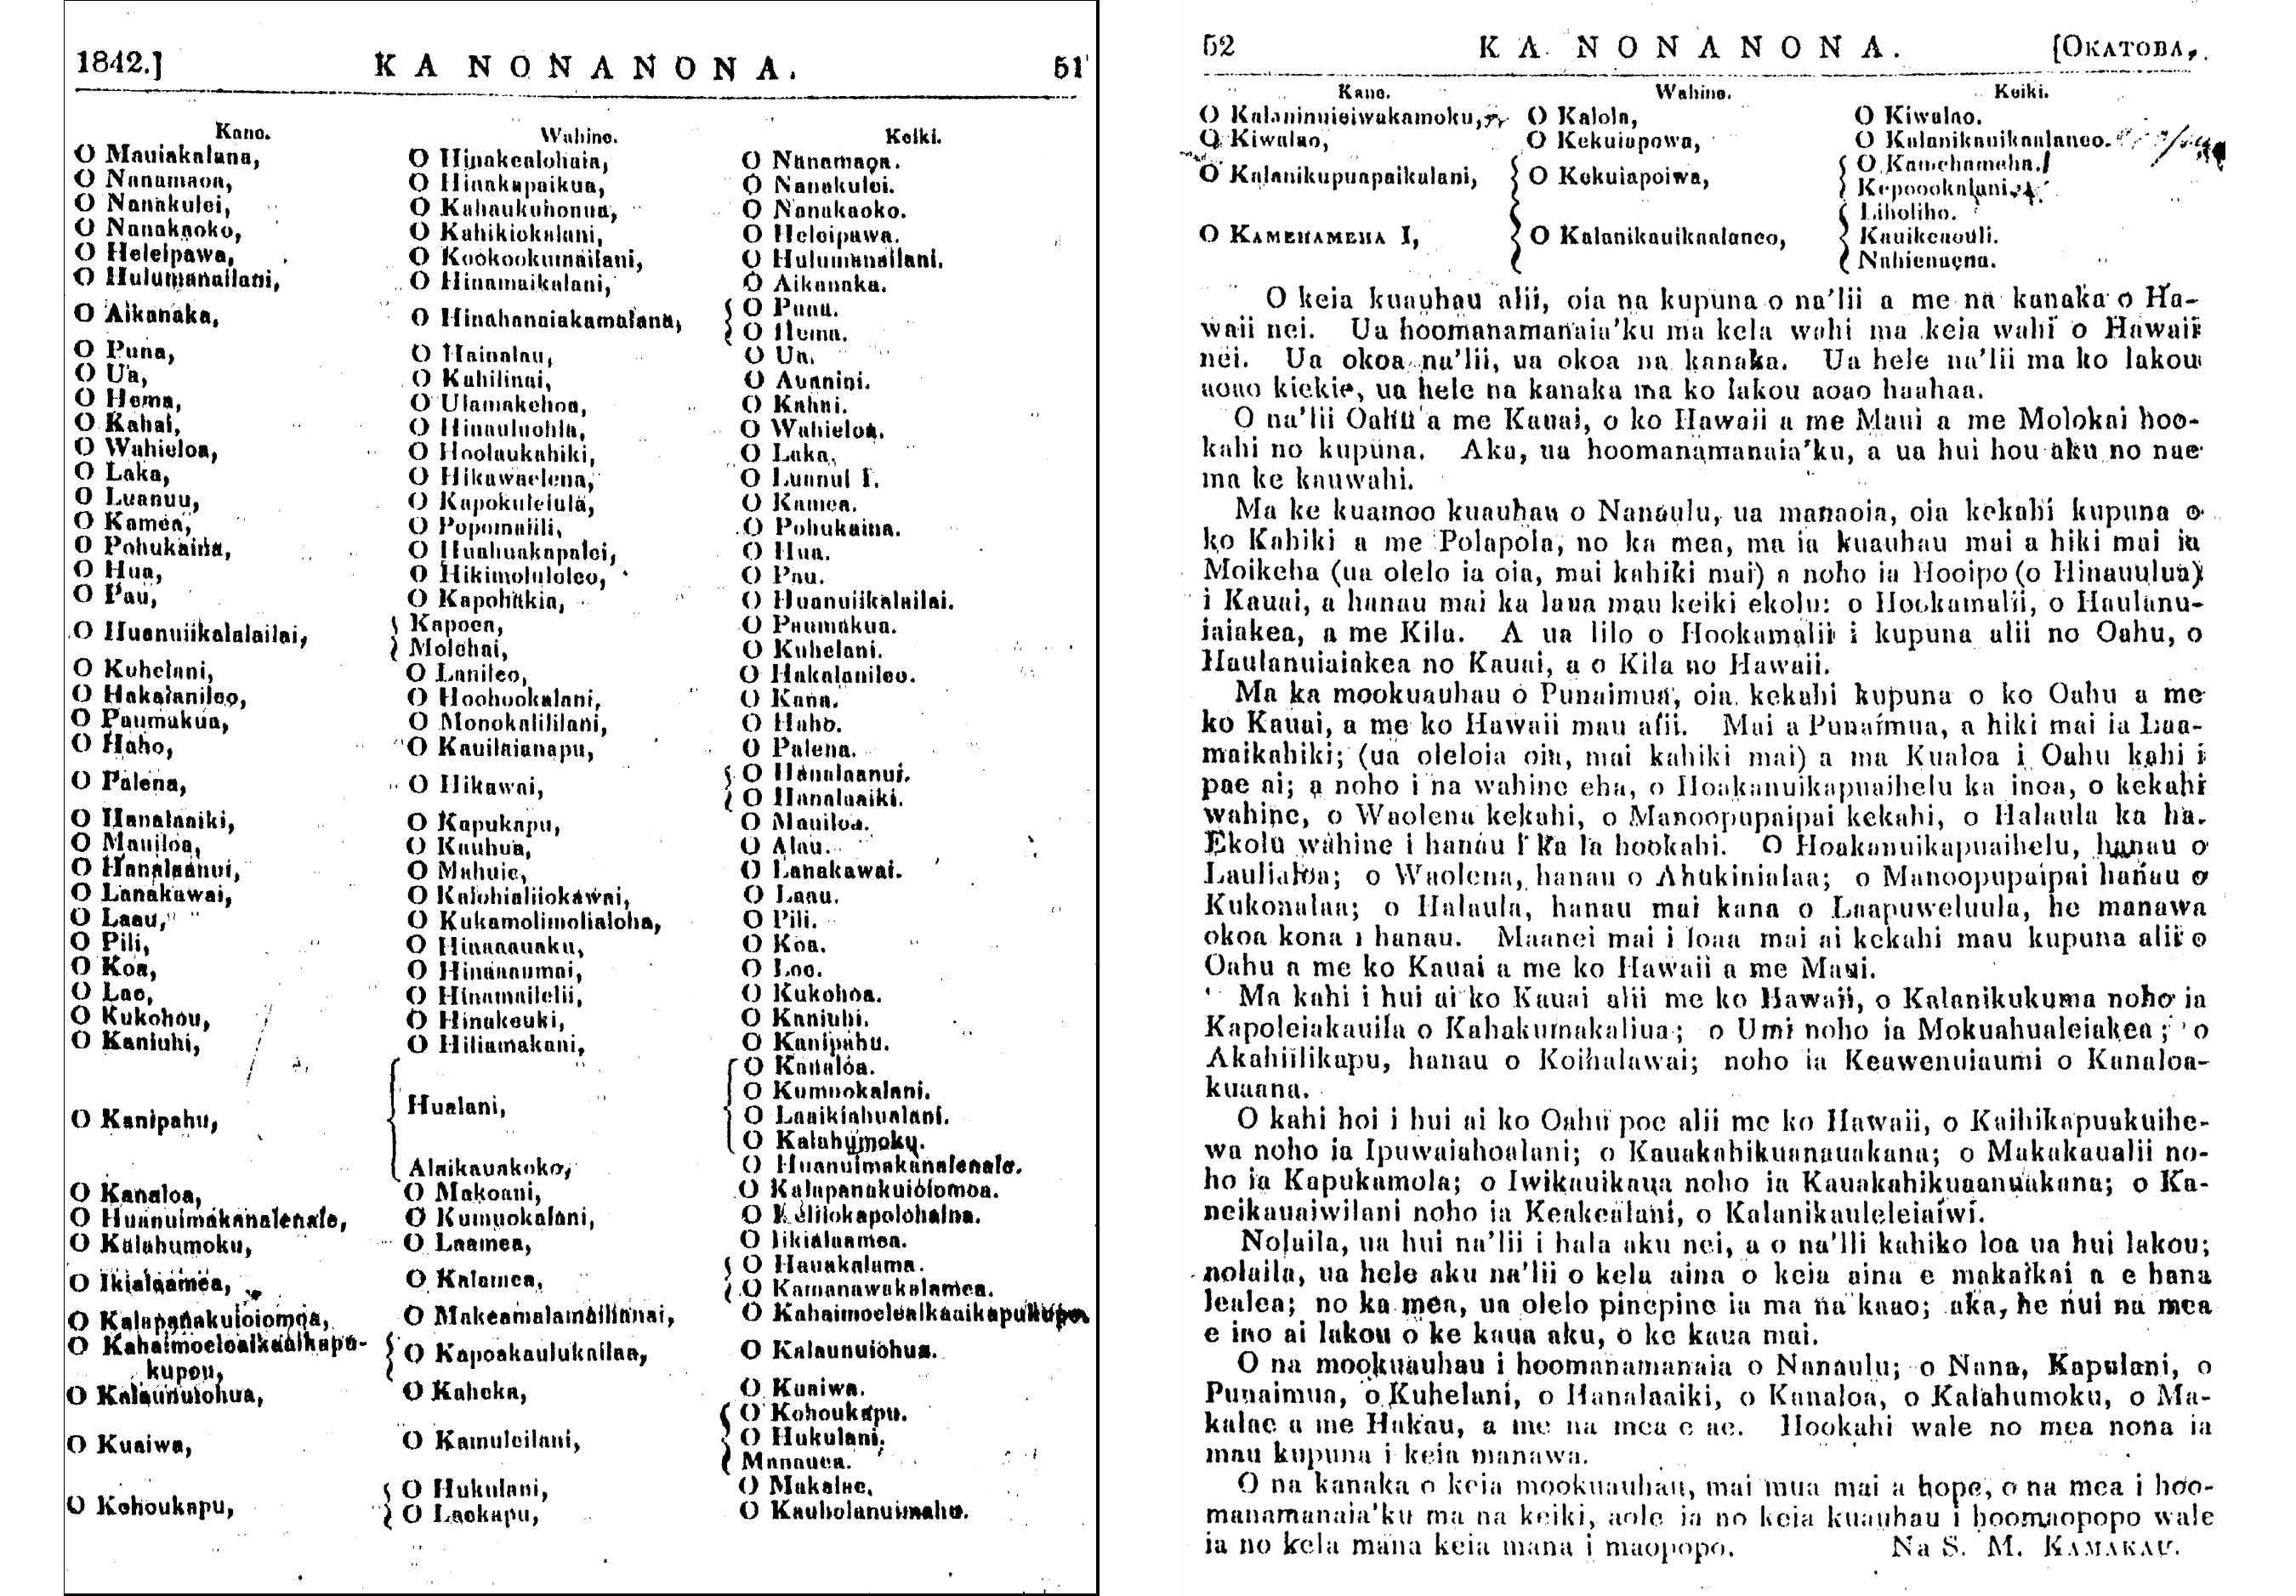 [Moʻokūʻauhau in nūpepa] From Ka Nonanona, Okatoba 1842.